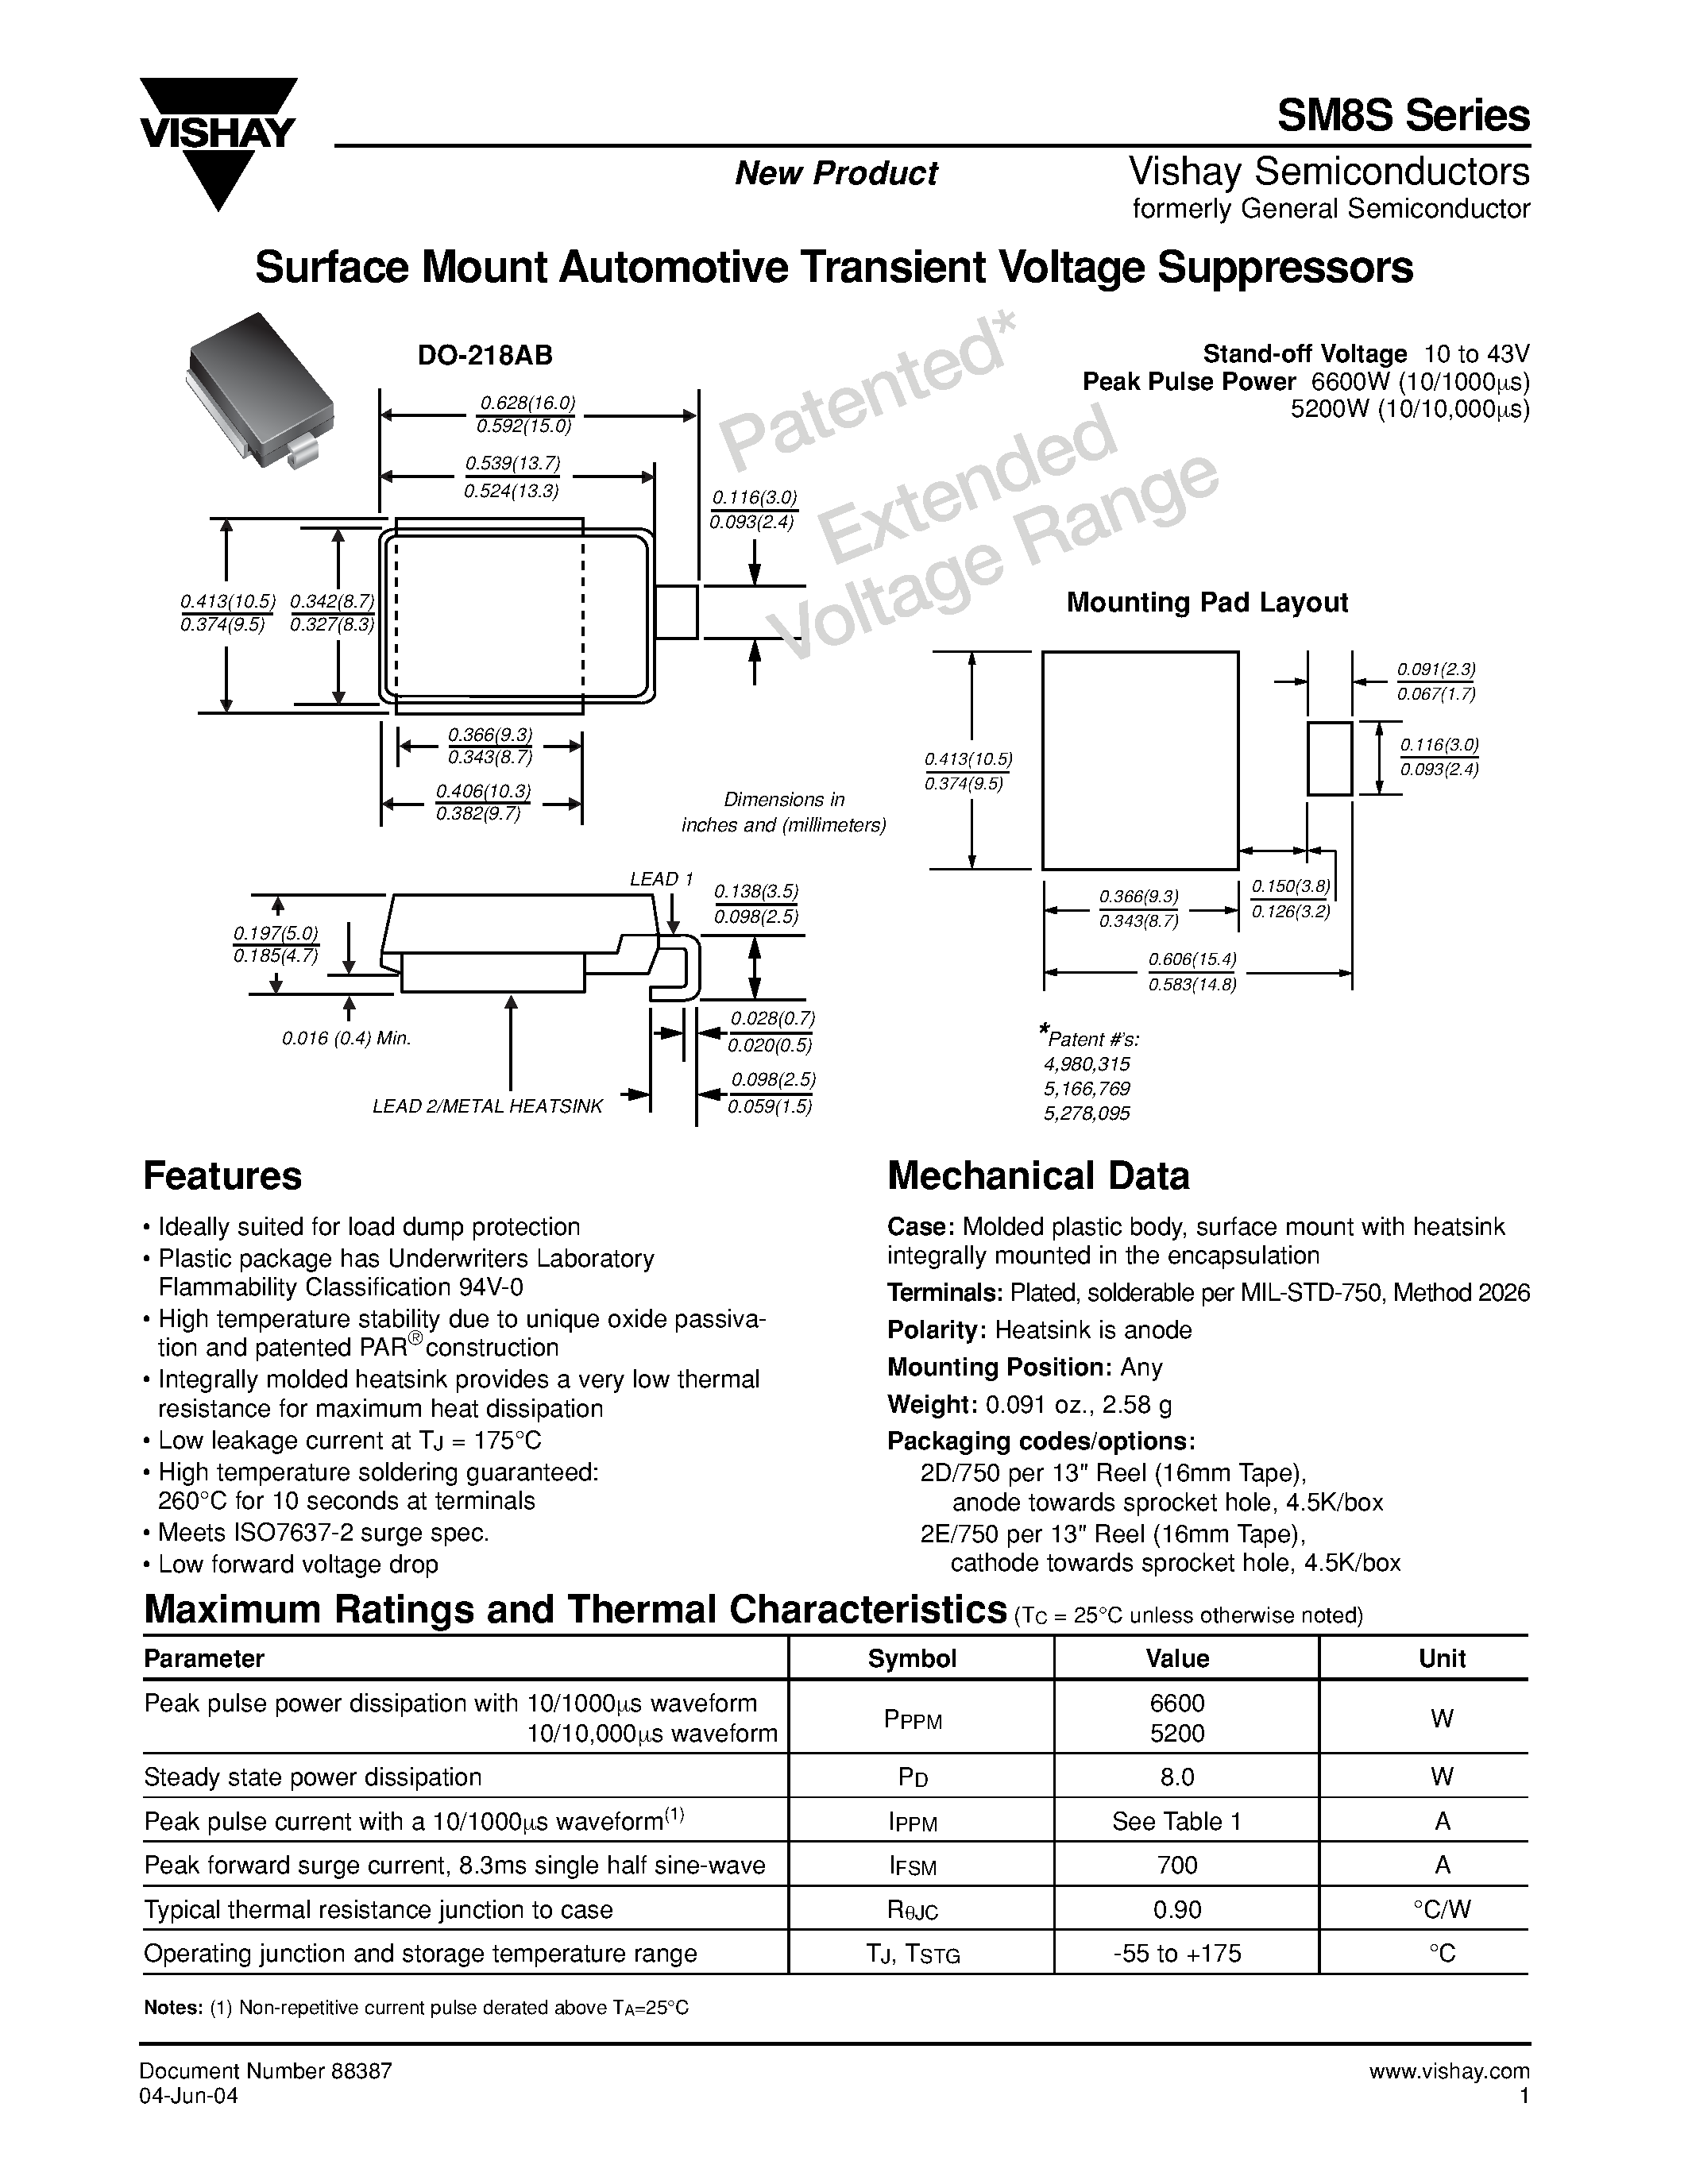 Даташит SM8S17A - Surface Mount Automotive Transient Voltage Suppressors страница 1